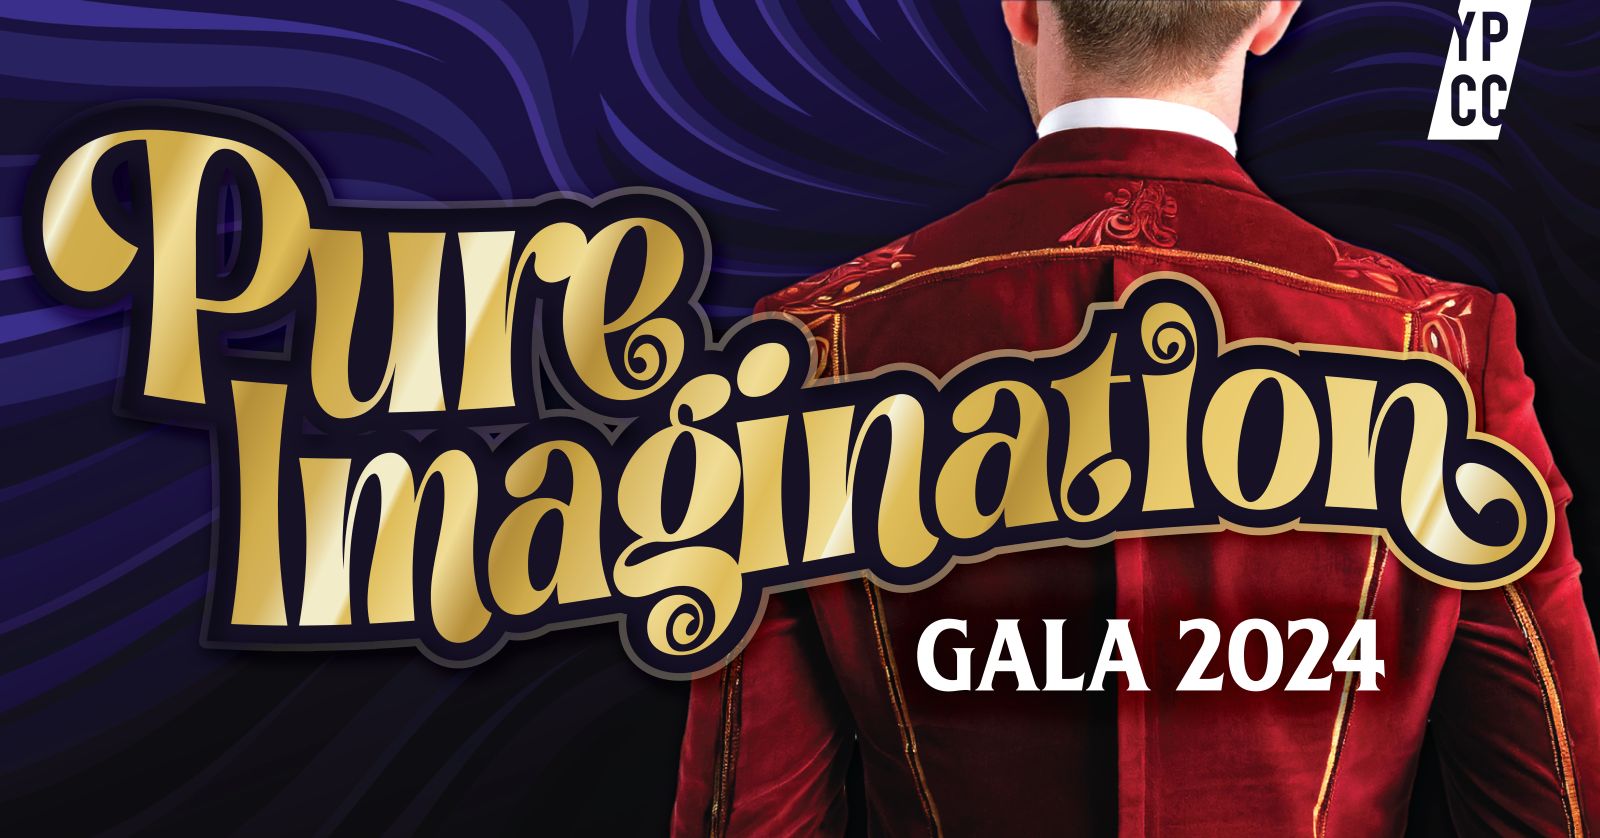 YPCC 2024 Gala -- Pure Imagination